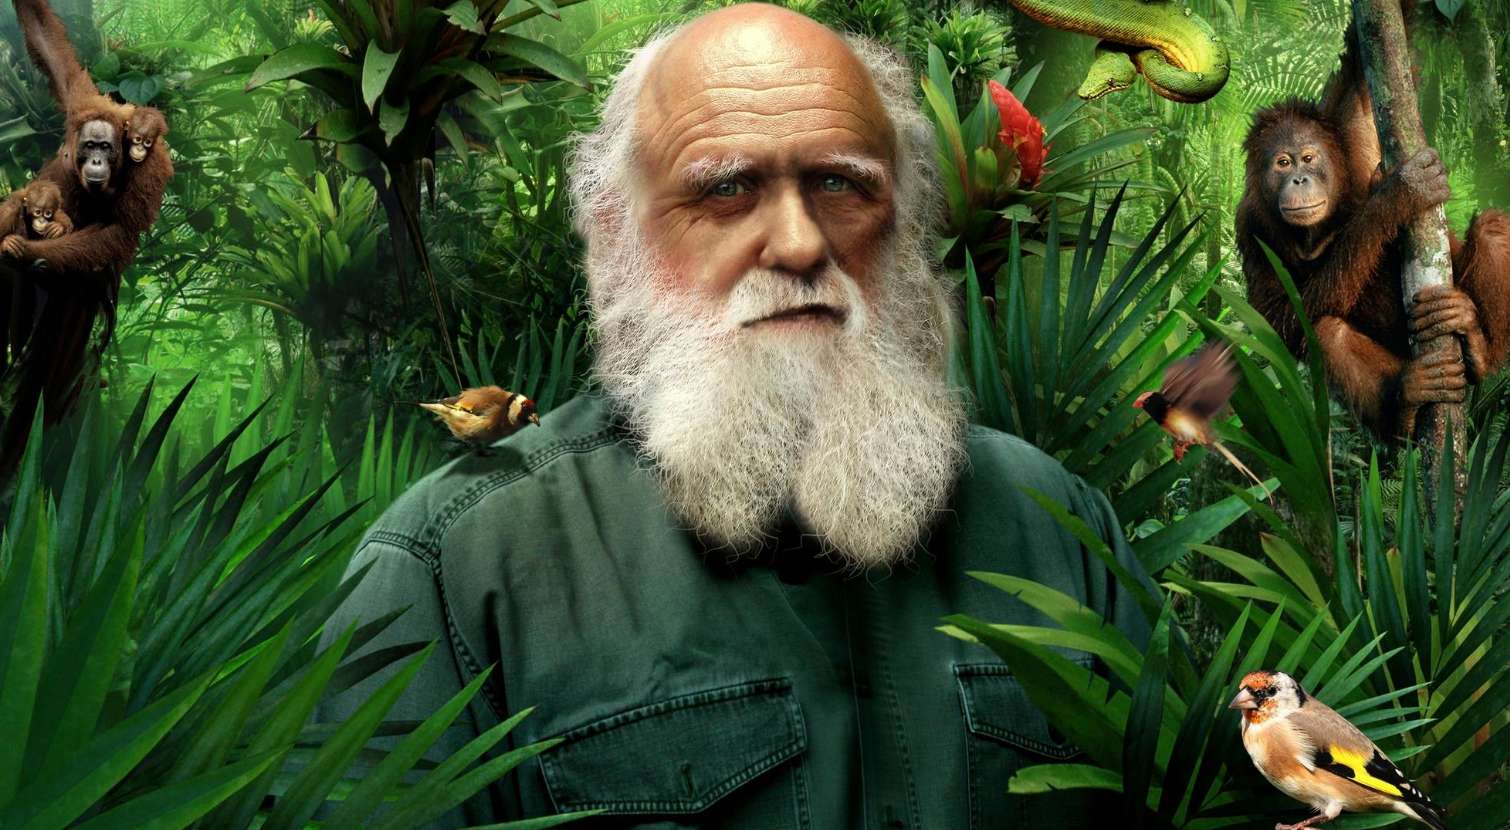 Charles Darwin online puzzel